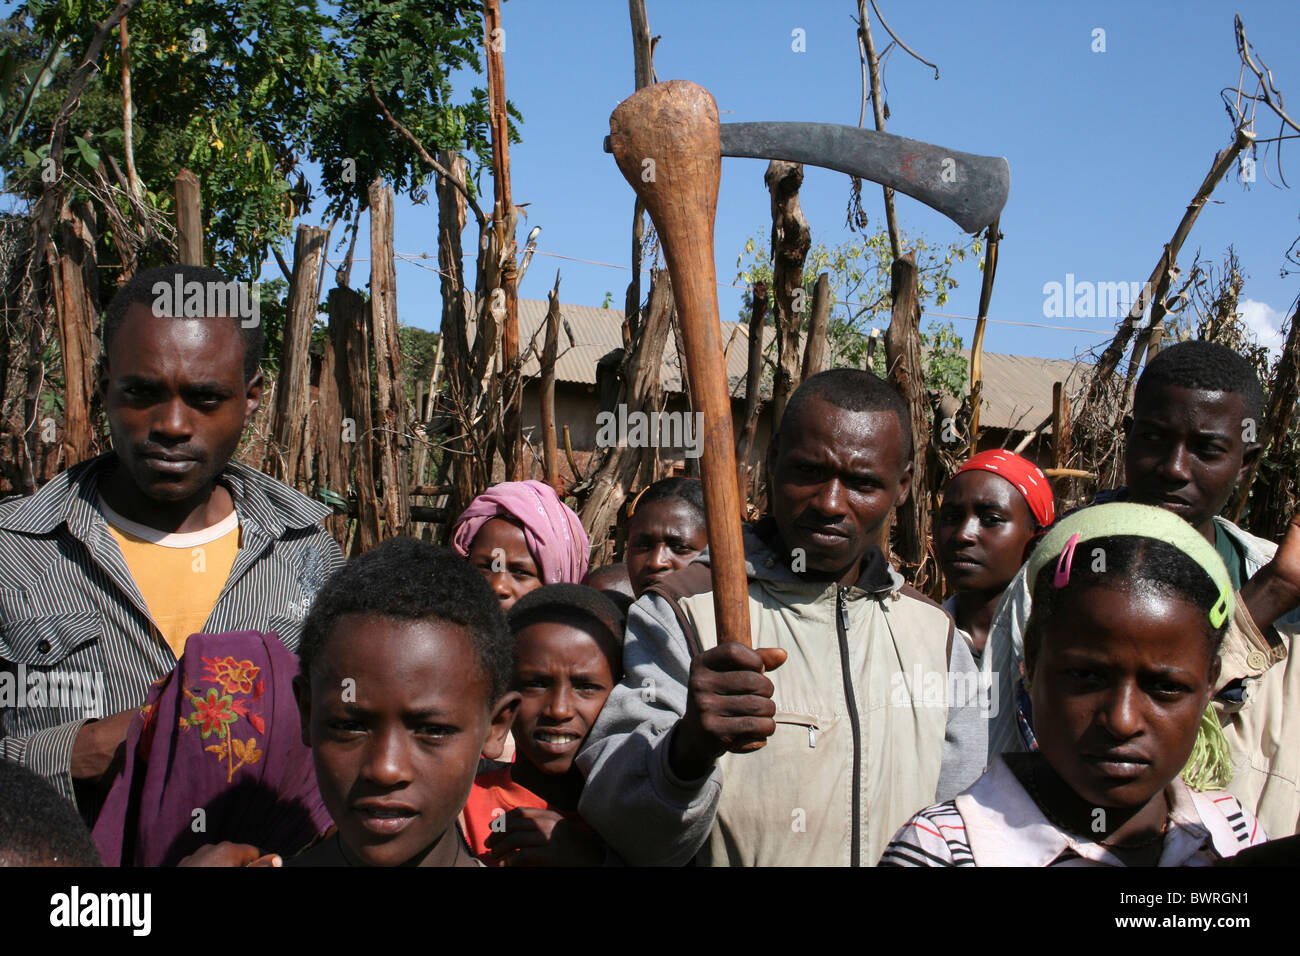 Group Of Oromo Tribespeople Taken in Hagere Mariam, Ethiopia Stock Photo